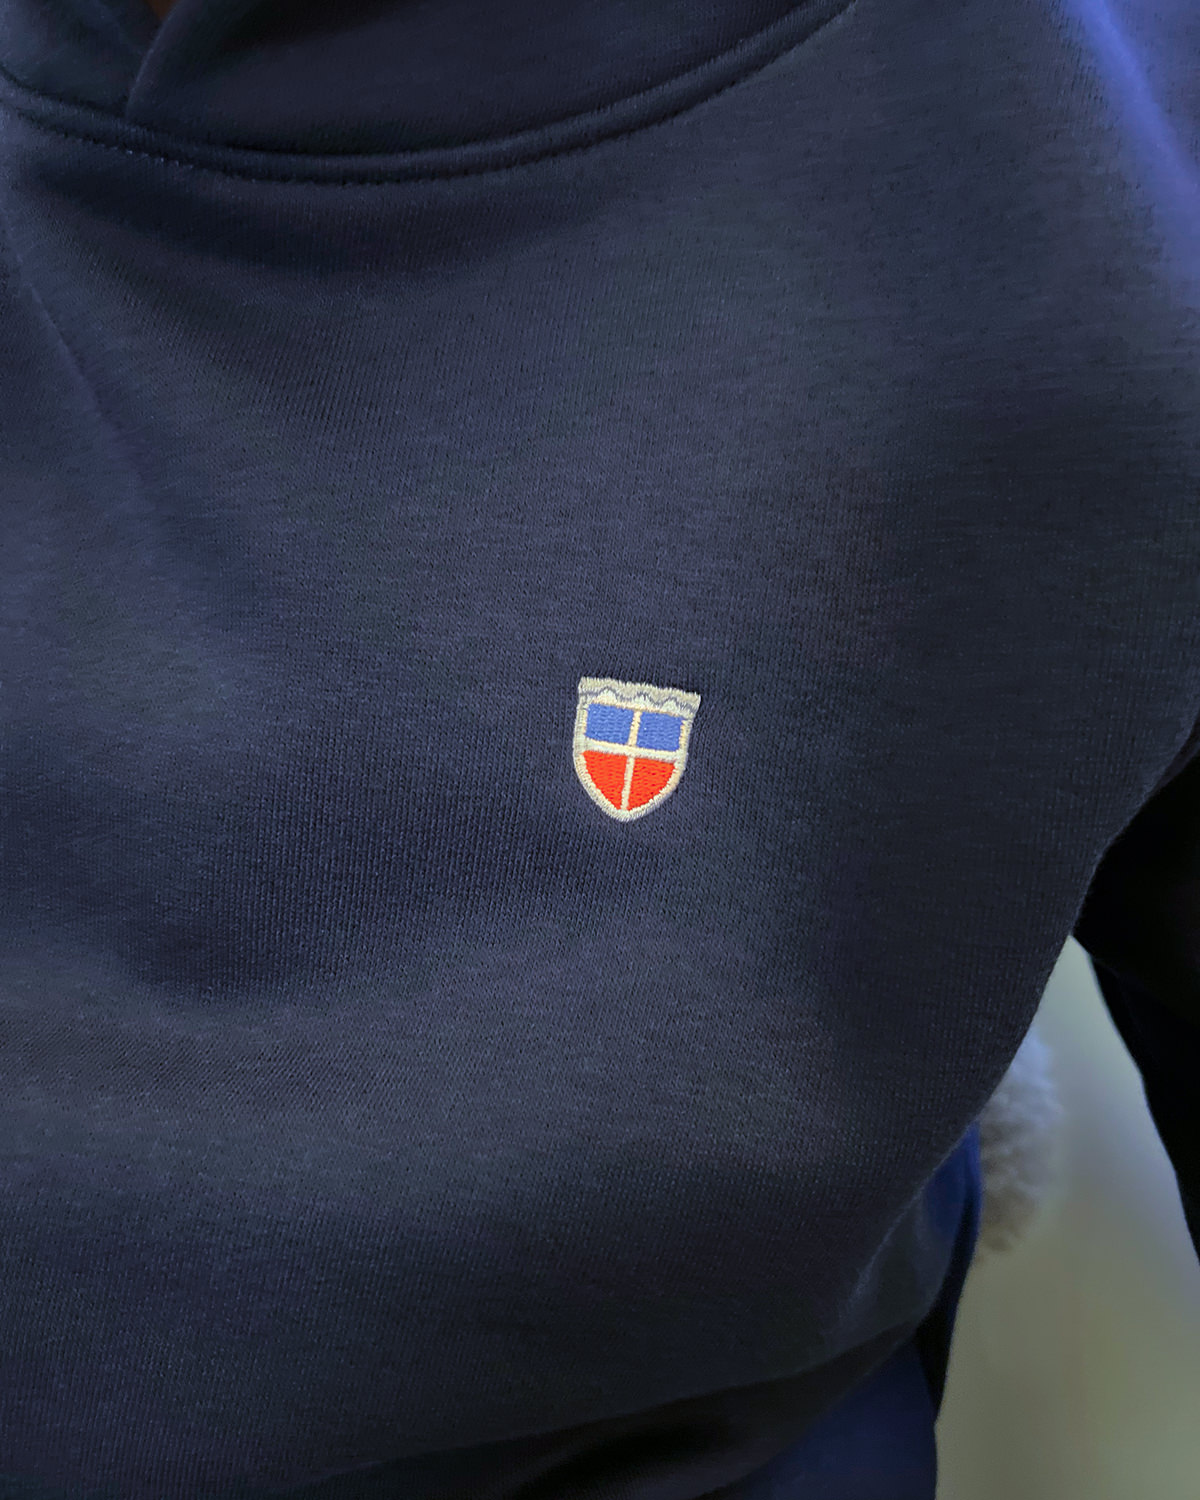 Das Saarland-Wappen ziert die Brust des Kinderhoodies.